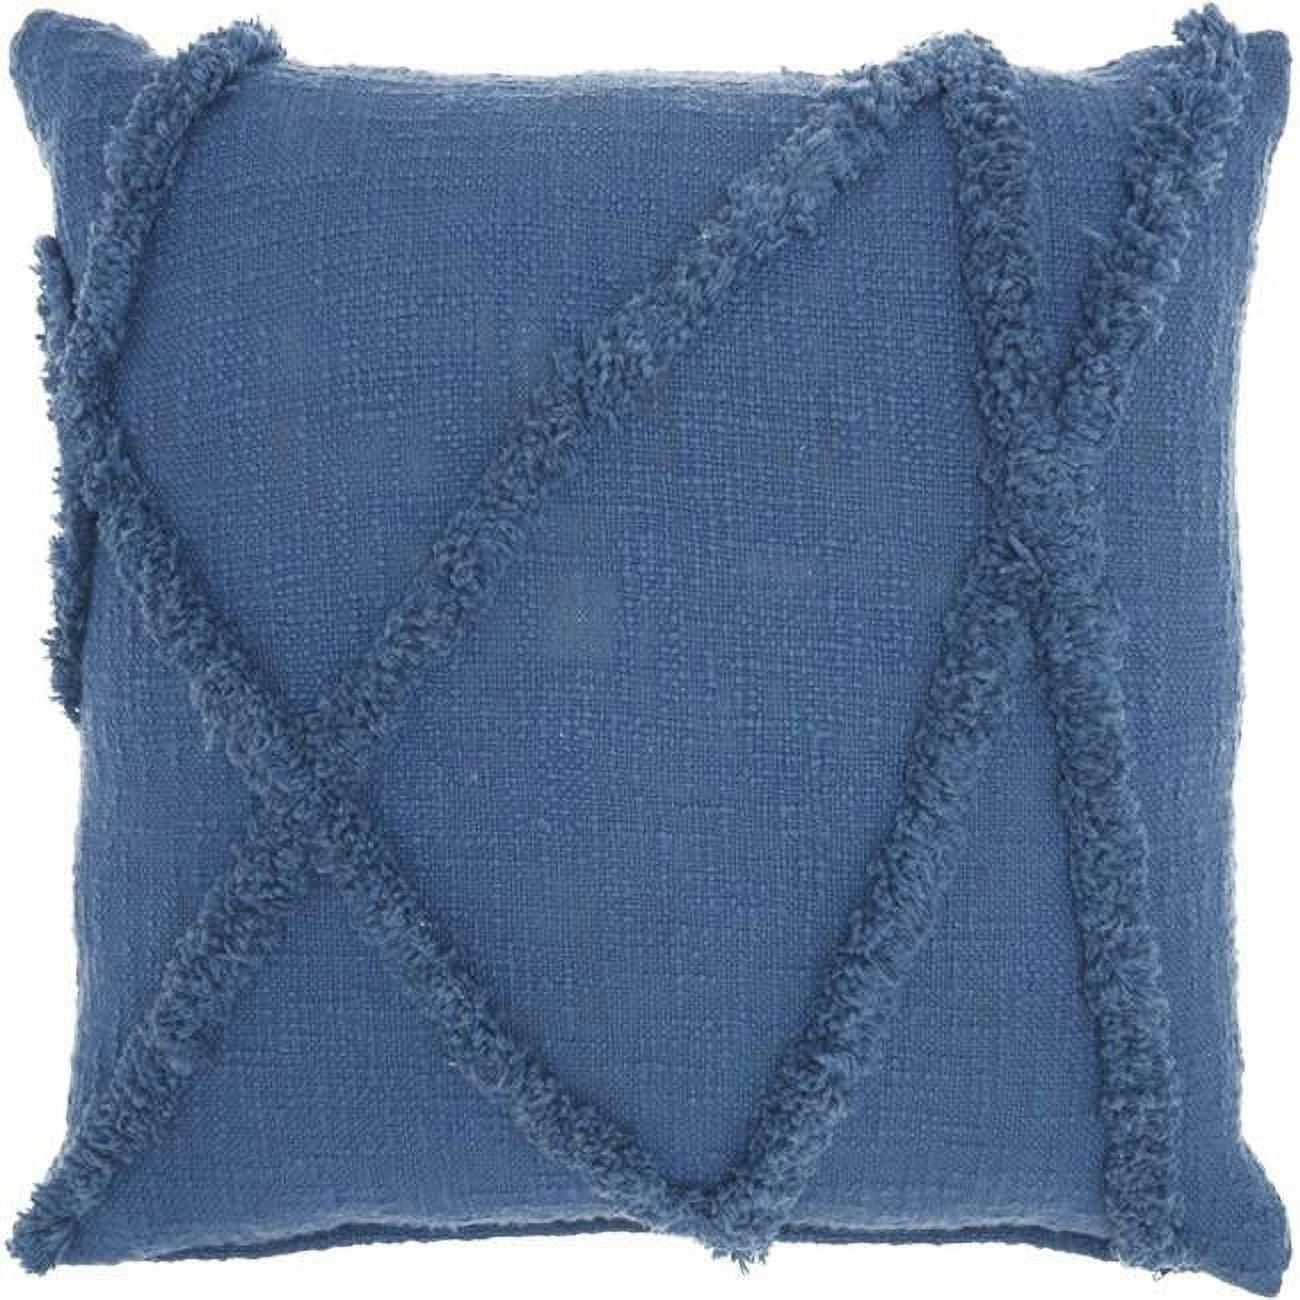 Boho Chic Blue Textured Square Cotton Throw Pillow 18"